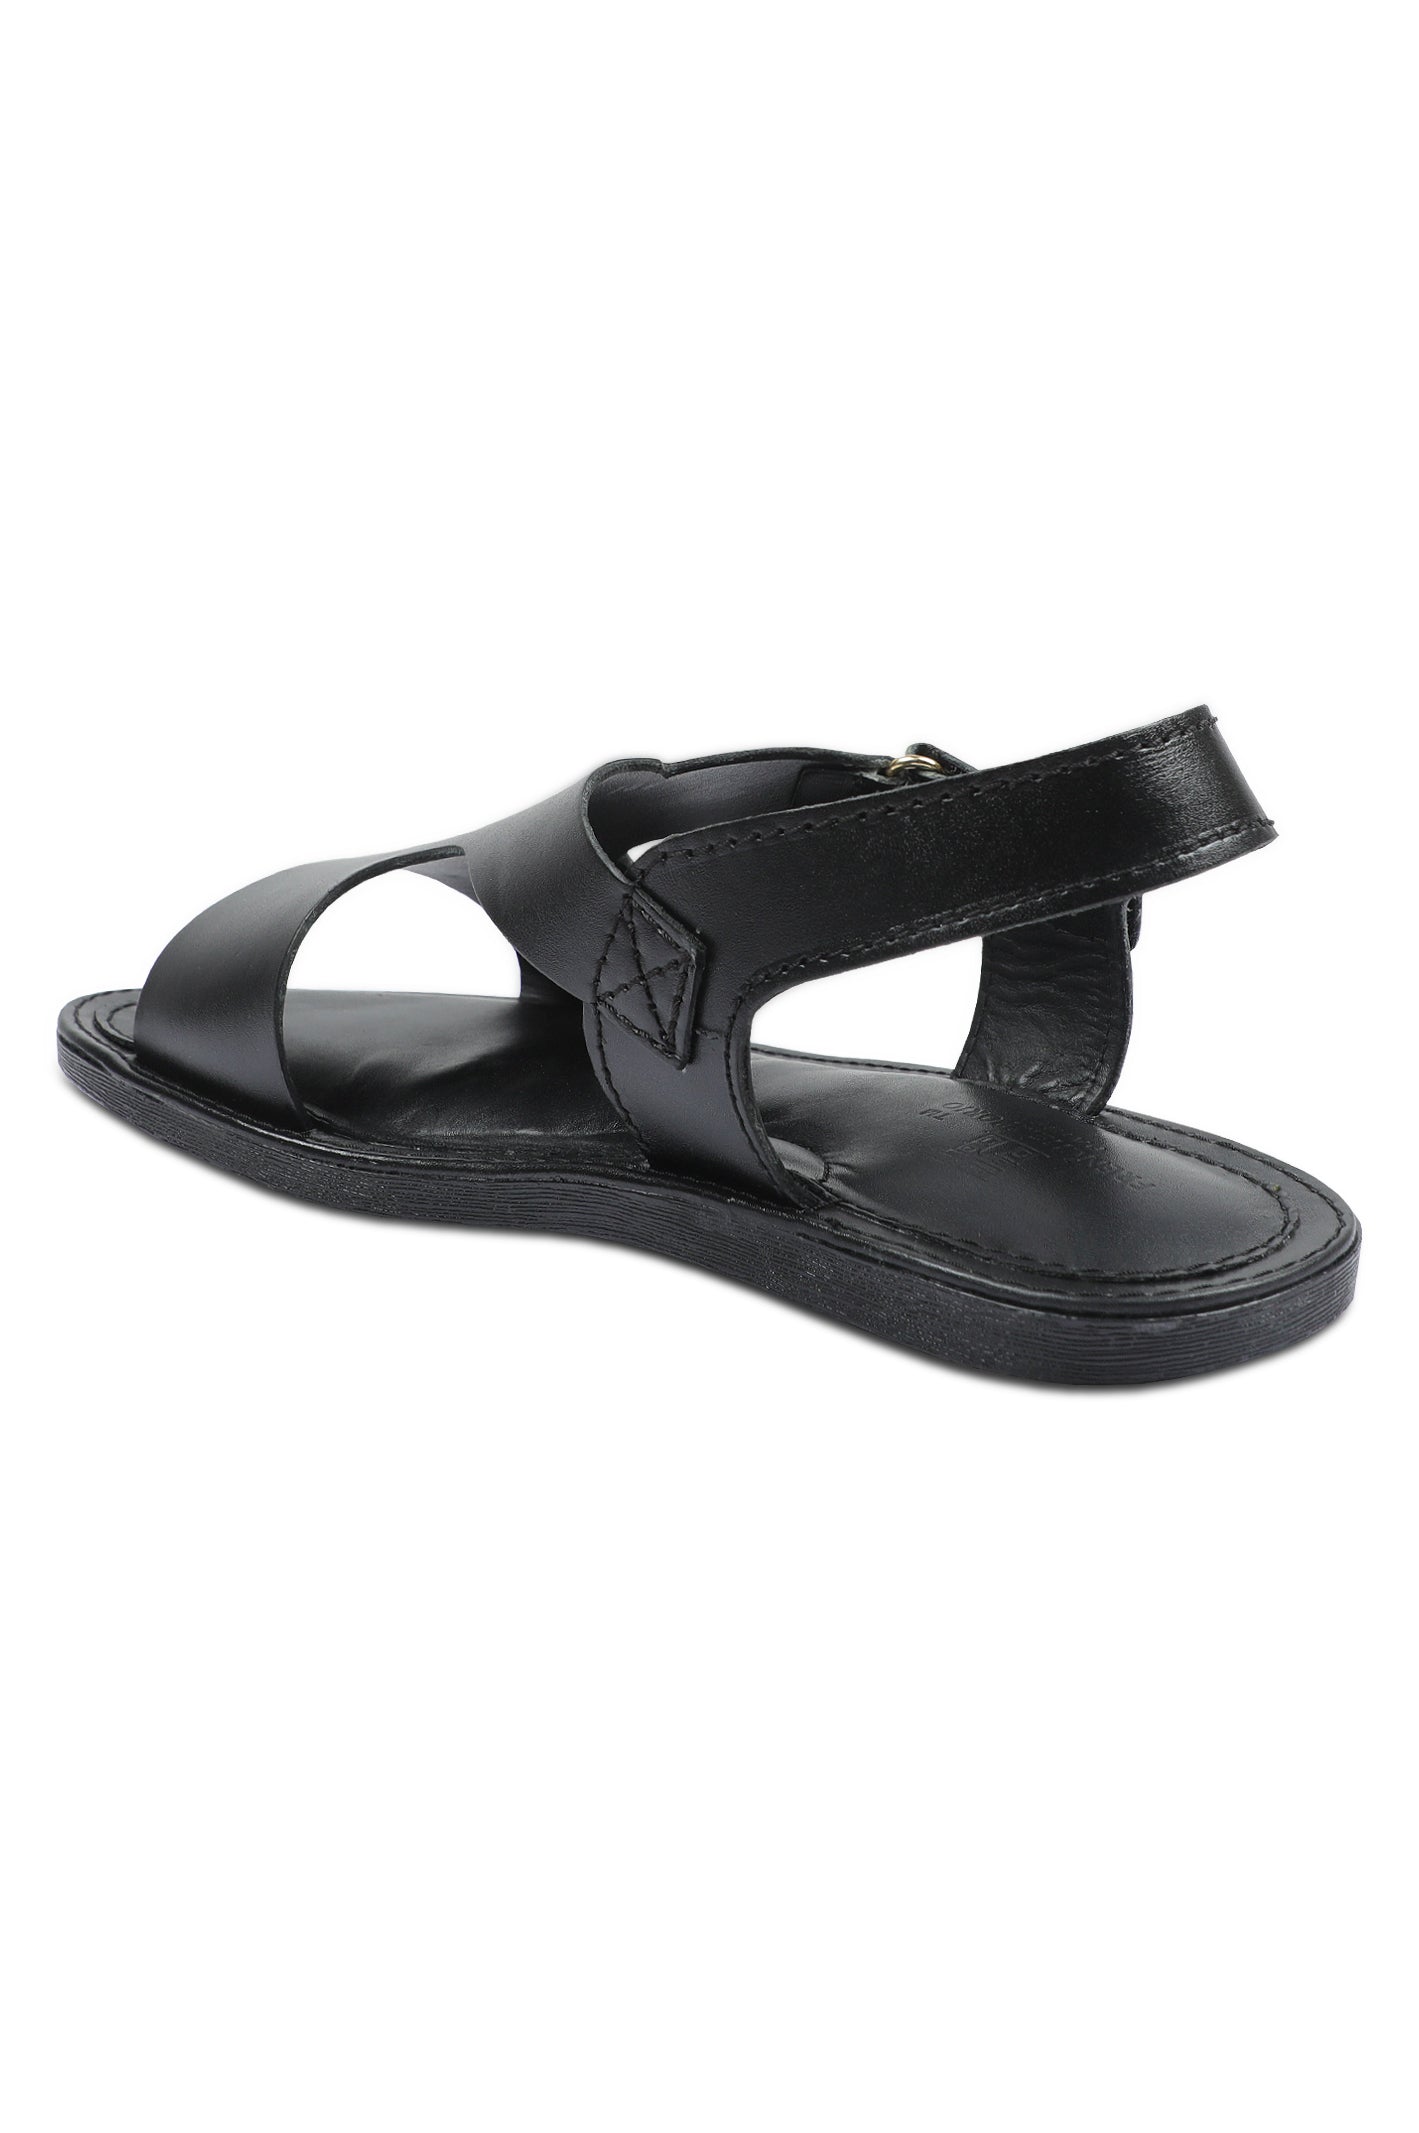 French Emporio Men Sandals SKU: SLD-0030-BLACK - Diners